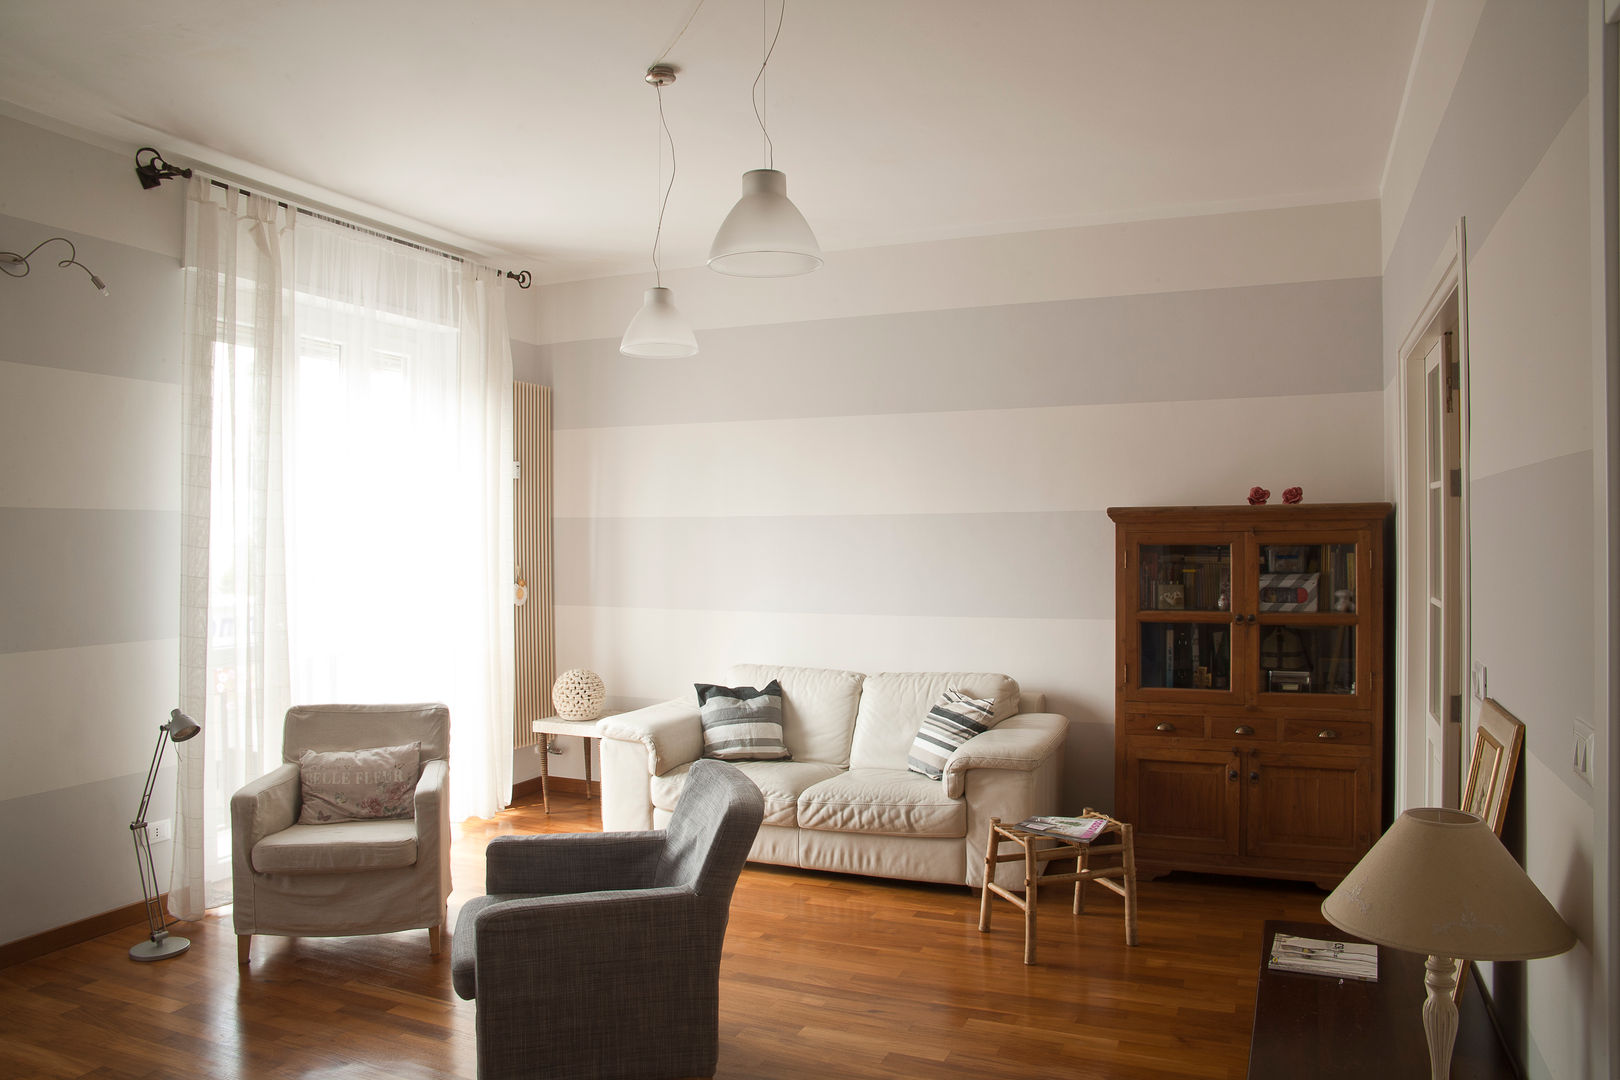 _Mondrian Home_, Alessandro Multari Ingegnere - I AM puro ingegno italiano Alessandro Multari Ingegnere - I AM puro ingegno italiano Eclectic style living room